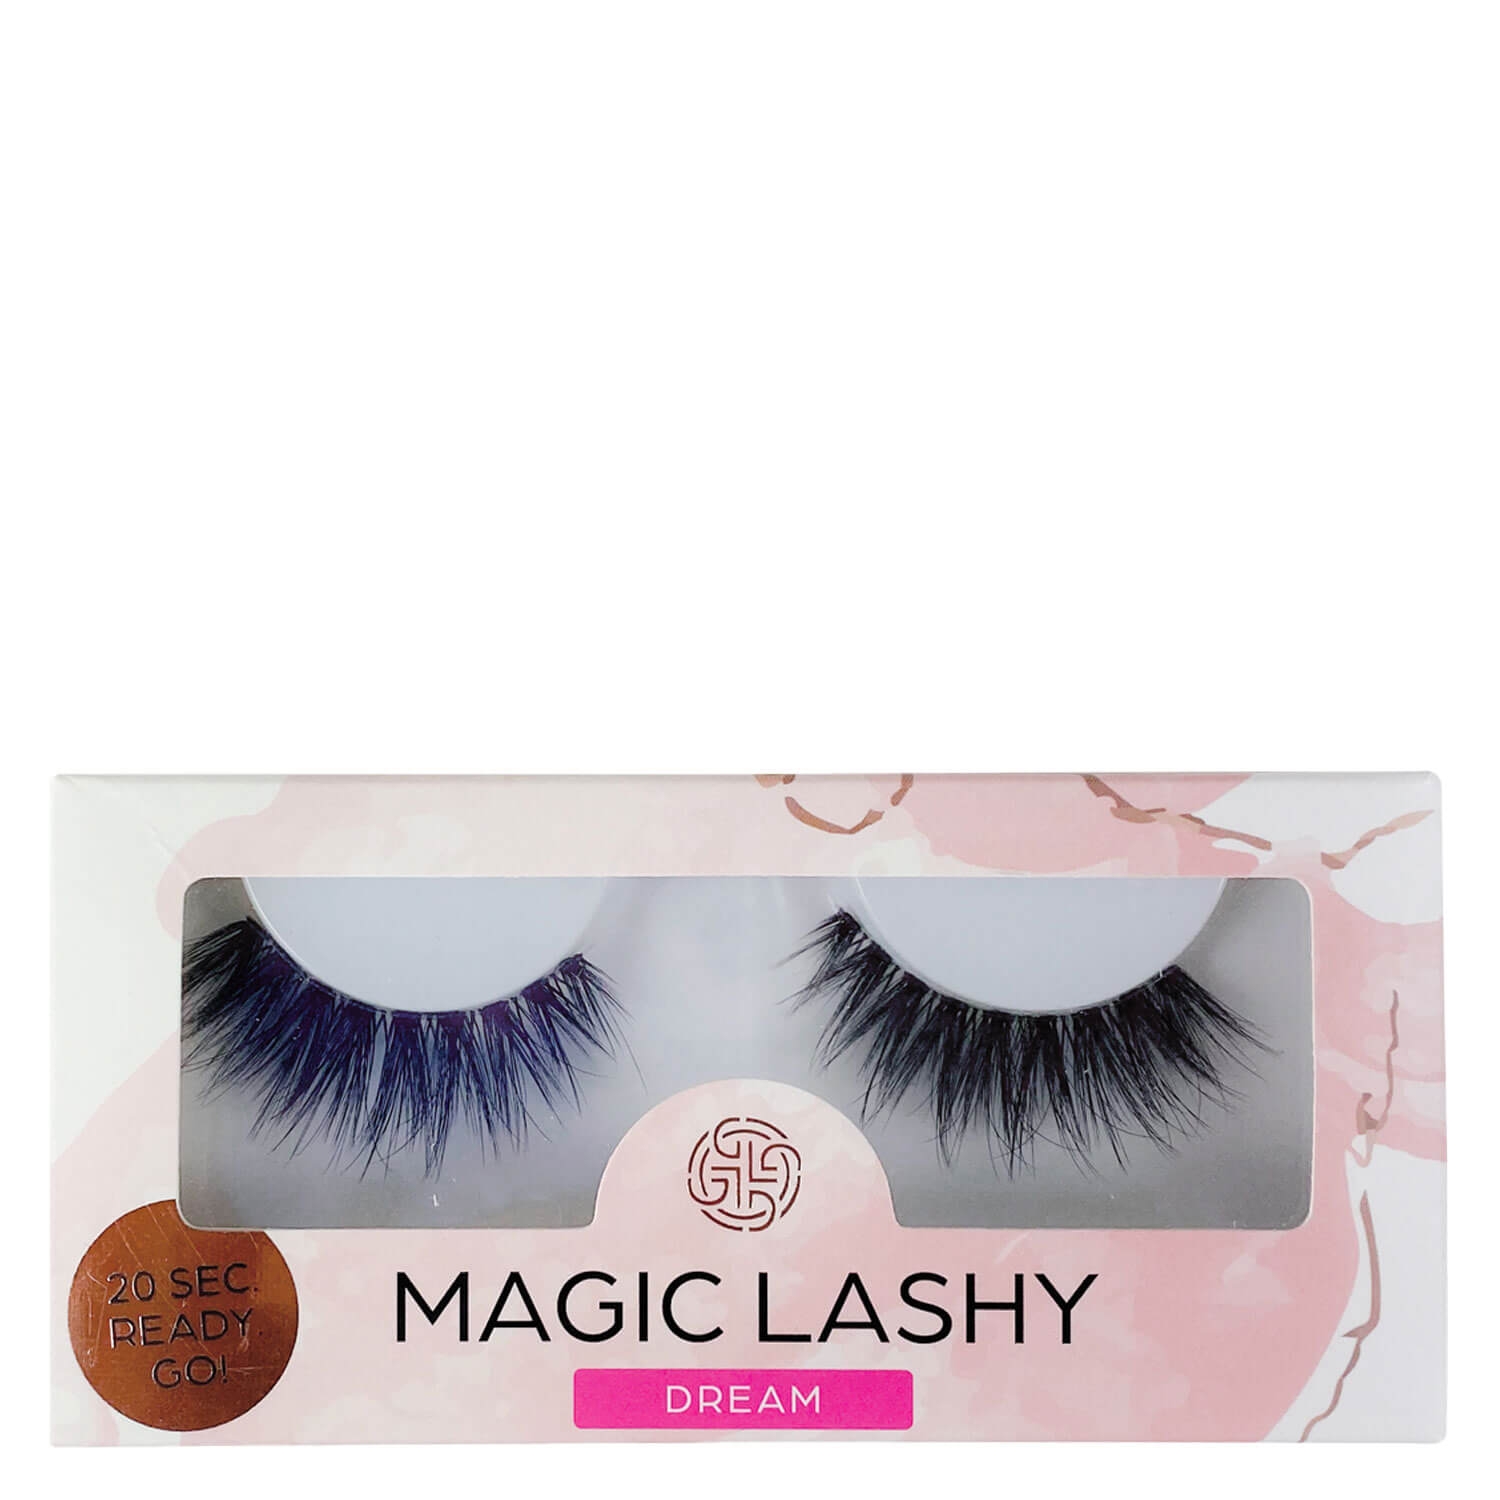 Produktbild von GL Beautycompany - Magic Lashy Dream